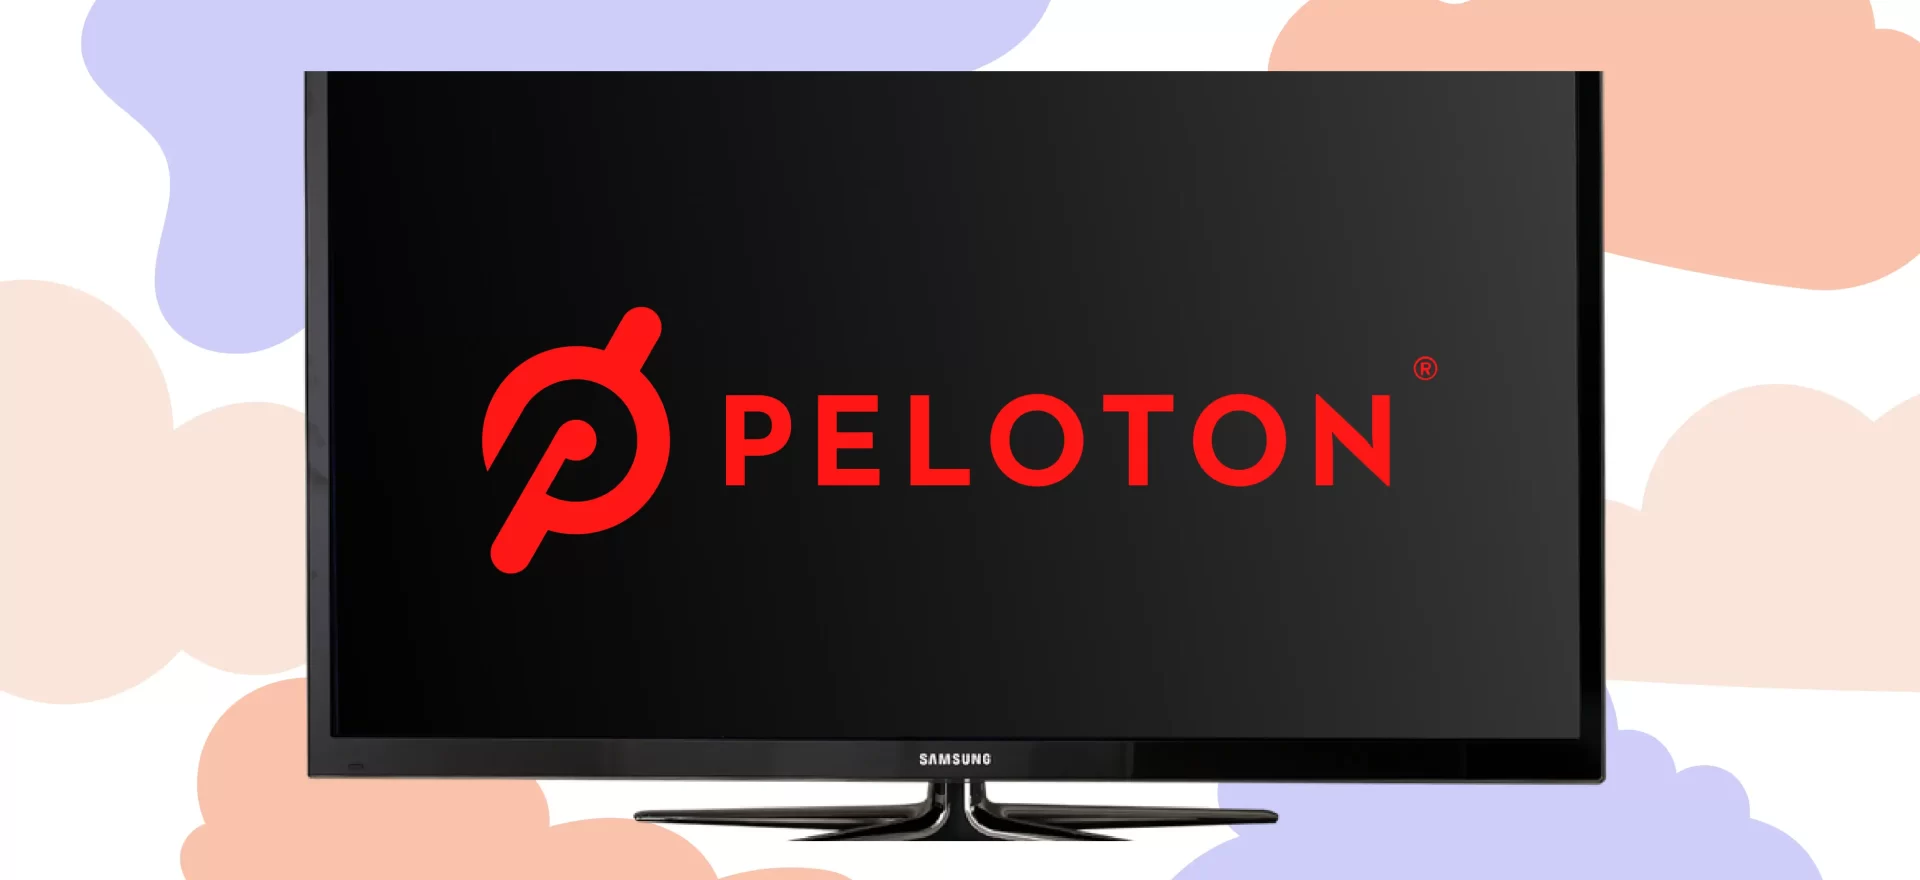 How To Install The Peloton App On Samsung Smart TV